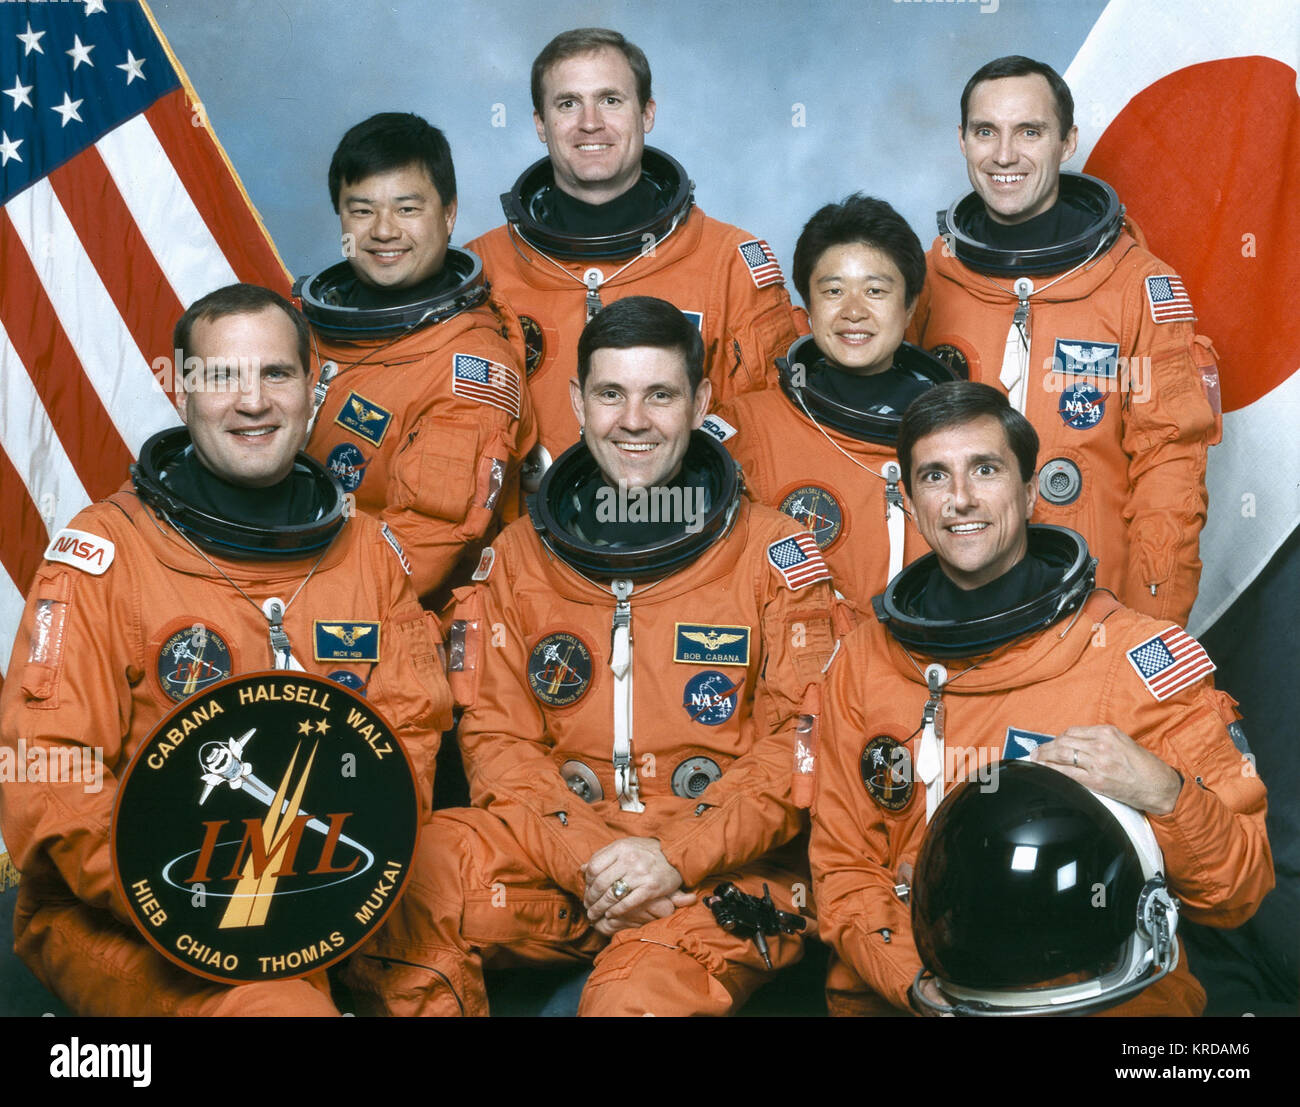 STS-65 CREW PORTRAIT: FRONT ROW L TO R: HIEB, RICK; CABANA, BOB; THOMAS, DONALD; BACK ROW L TO R: CHIAO, LEROY; HALSELL, JAMES; MUKAI, CHIAKI; WALZ, CARL. Sts-65 crew Stock Photo